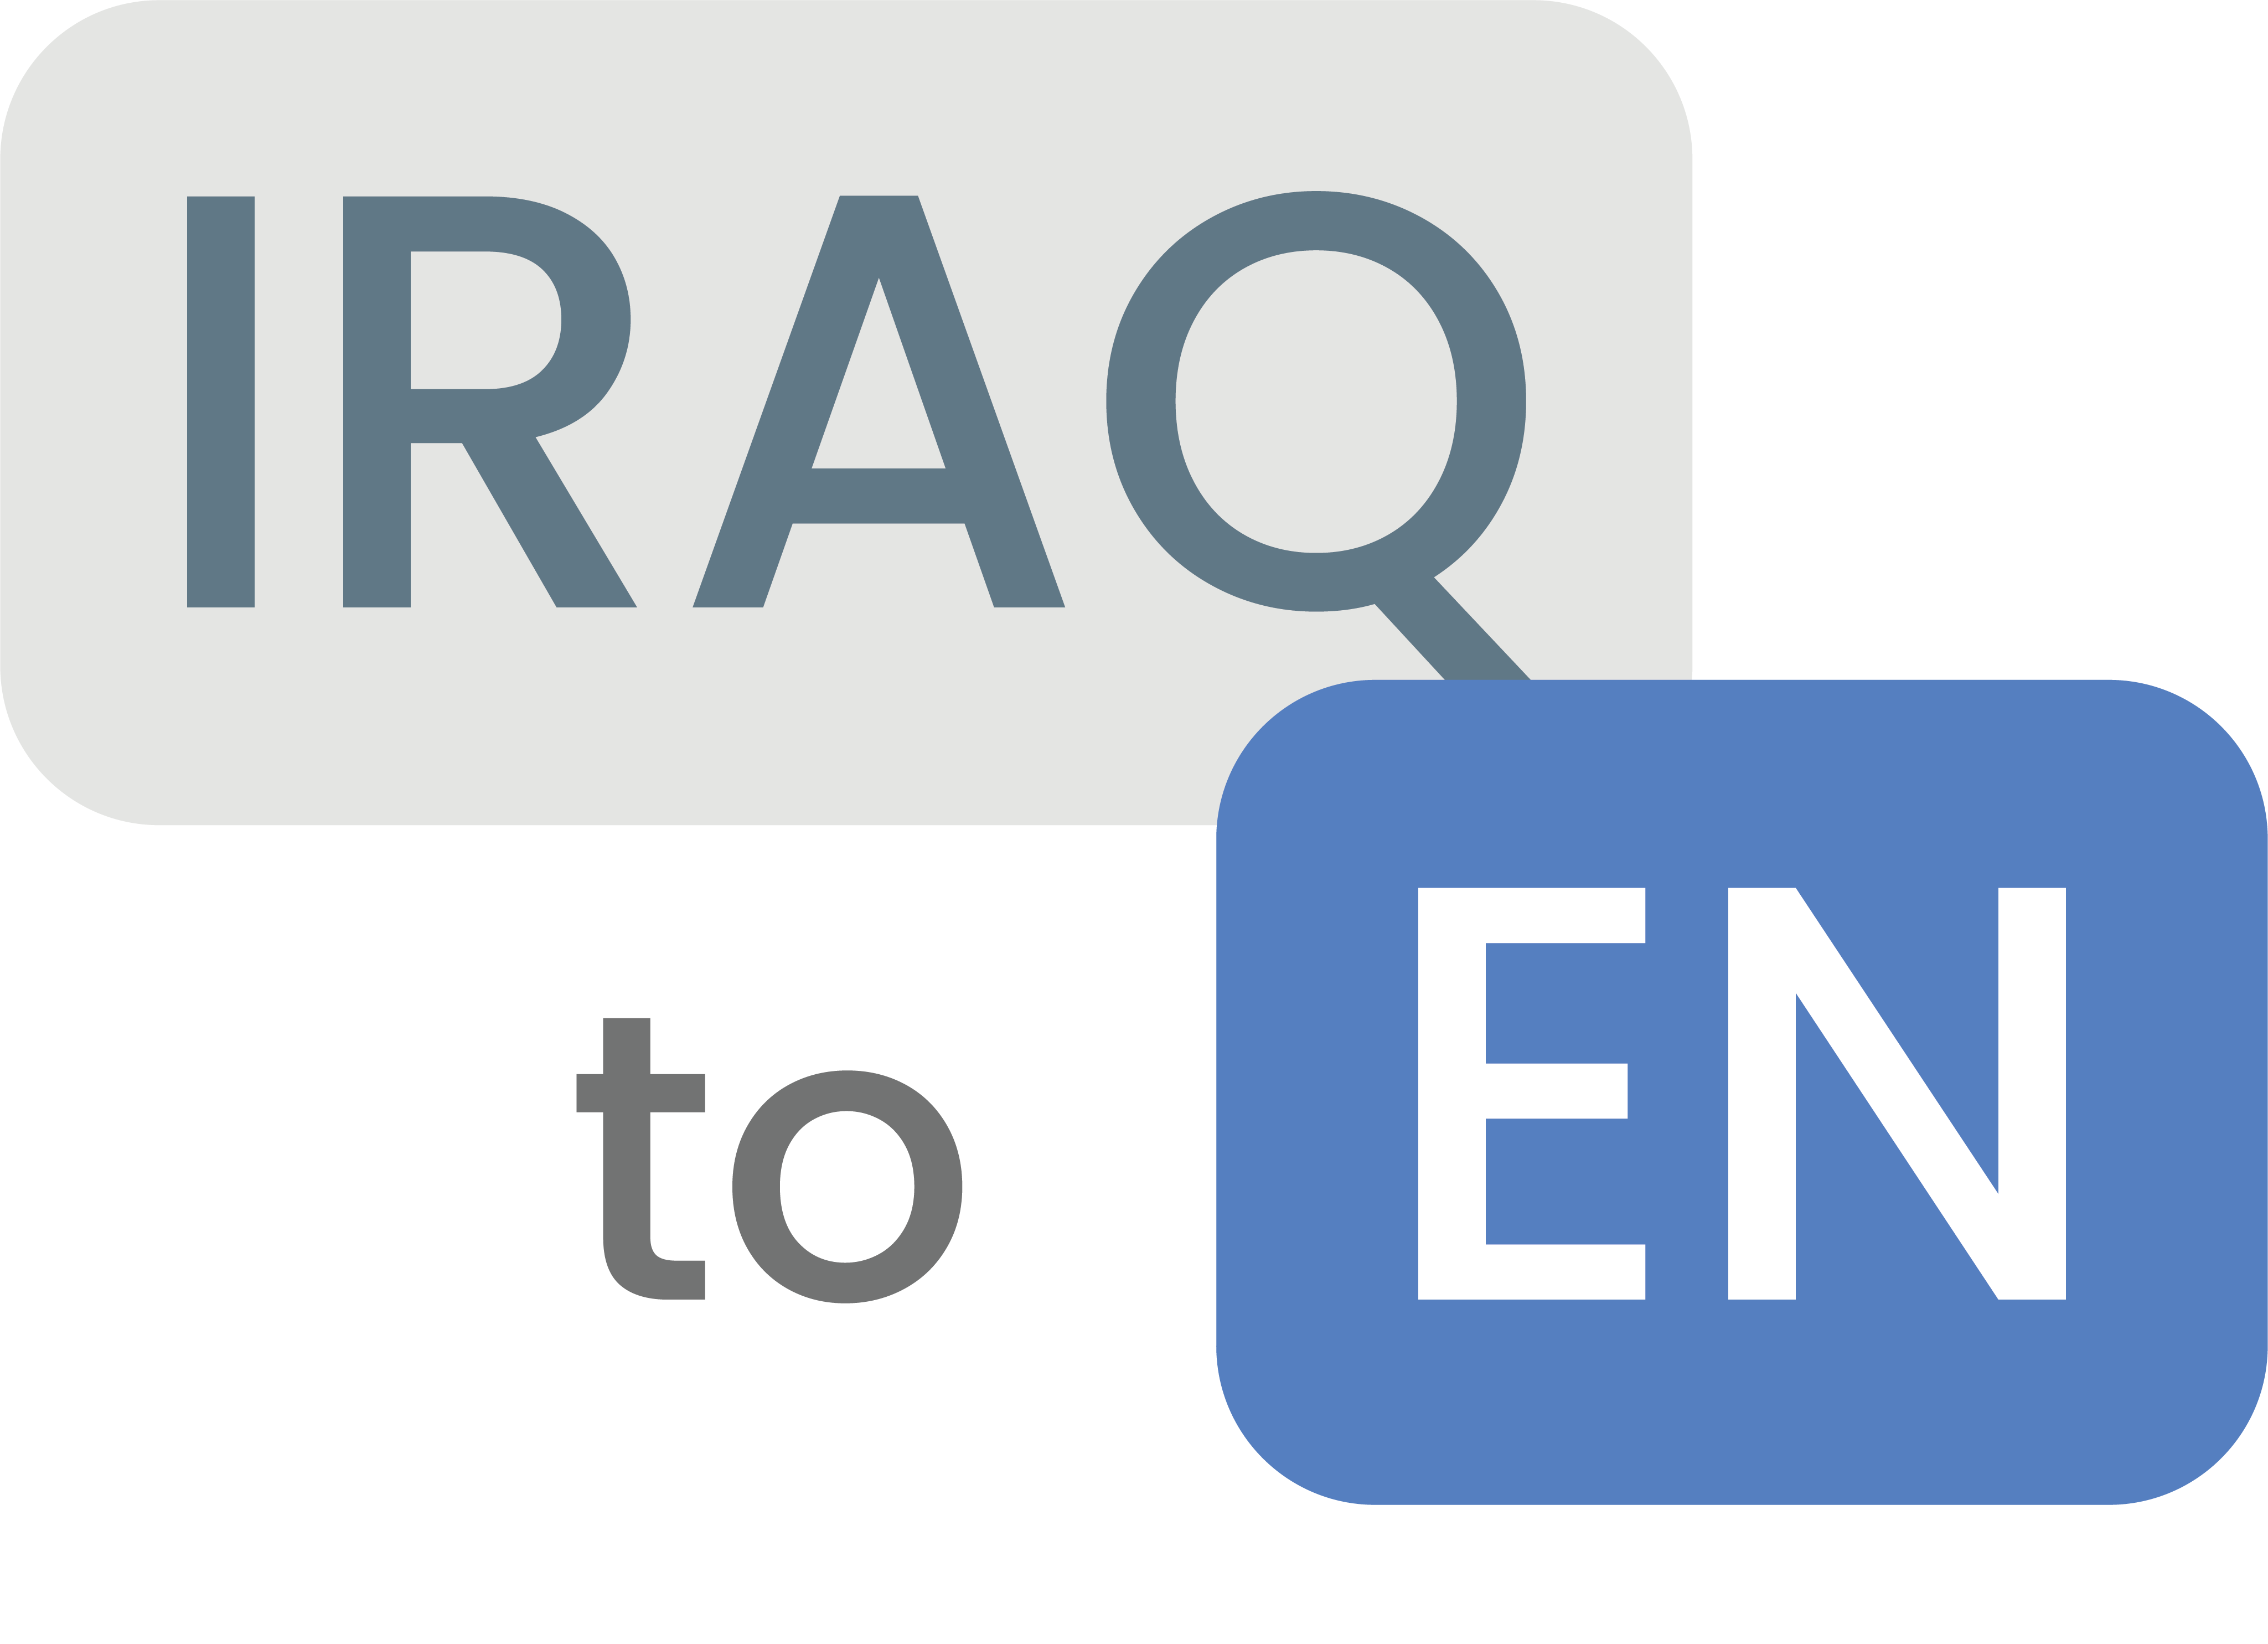 Iraq to English – Iraqi News in English